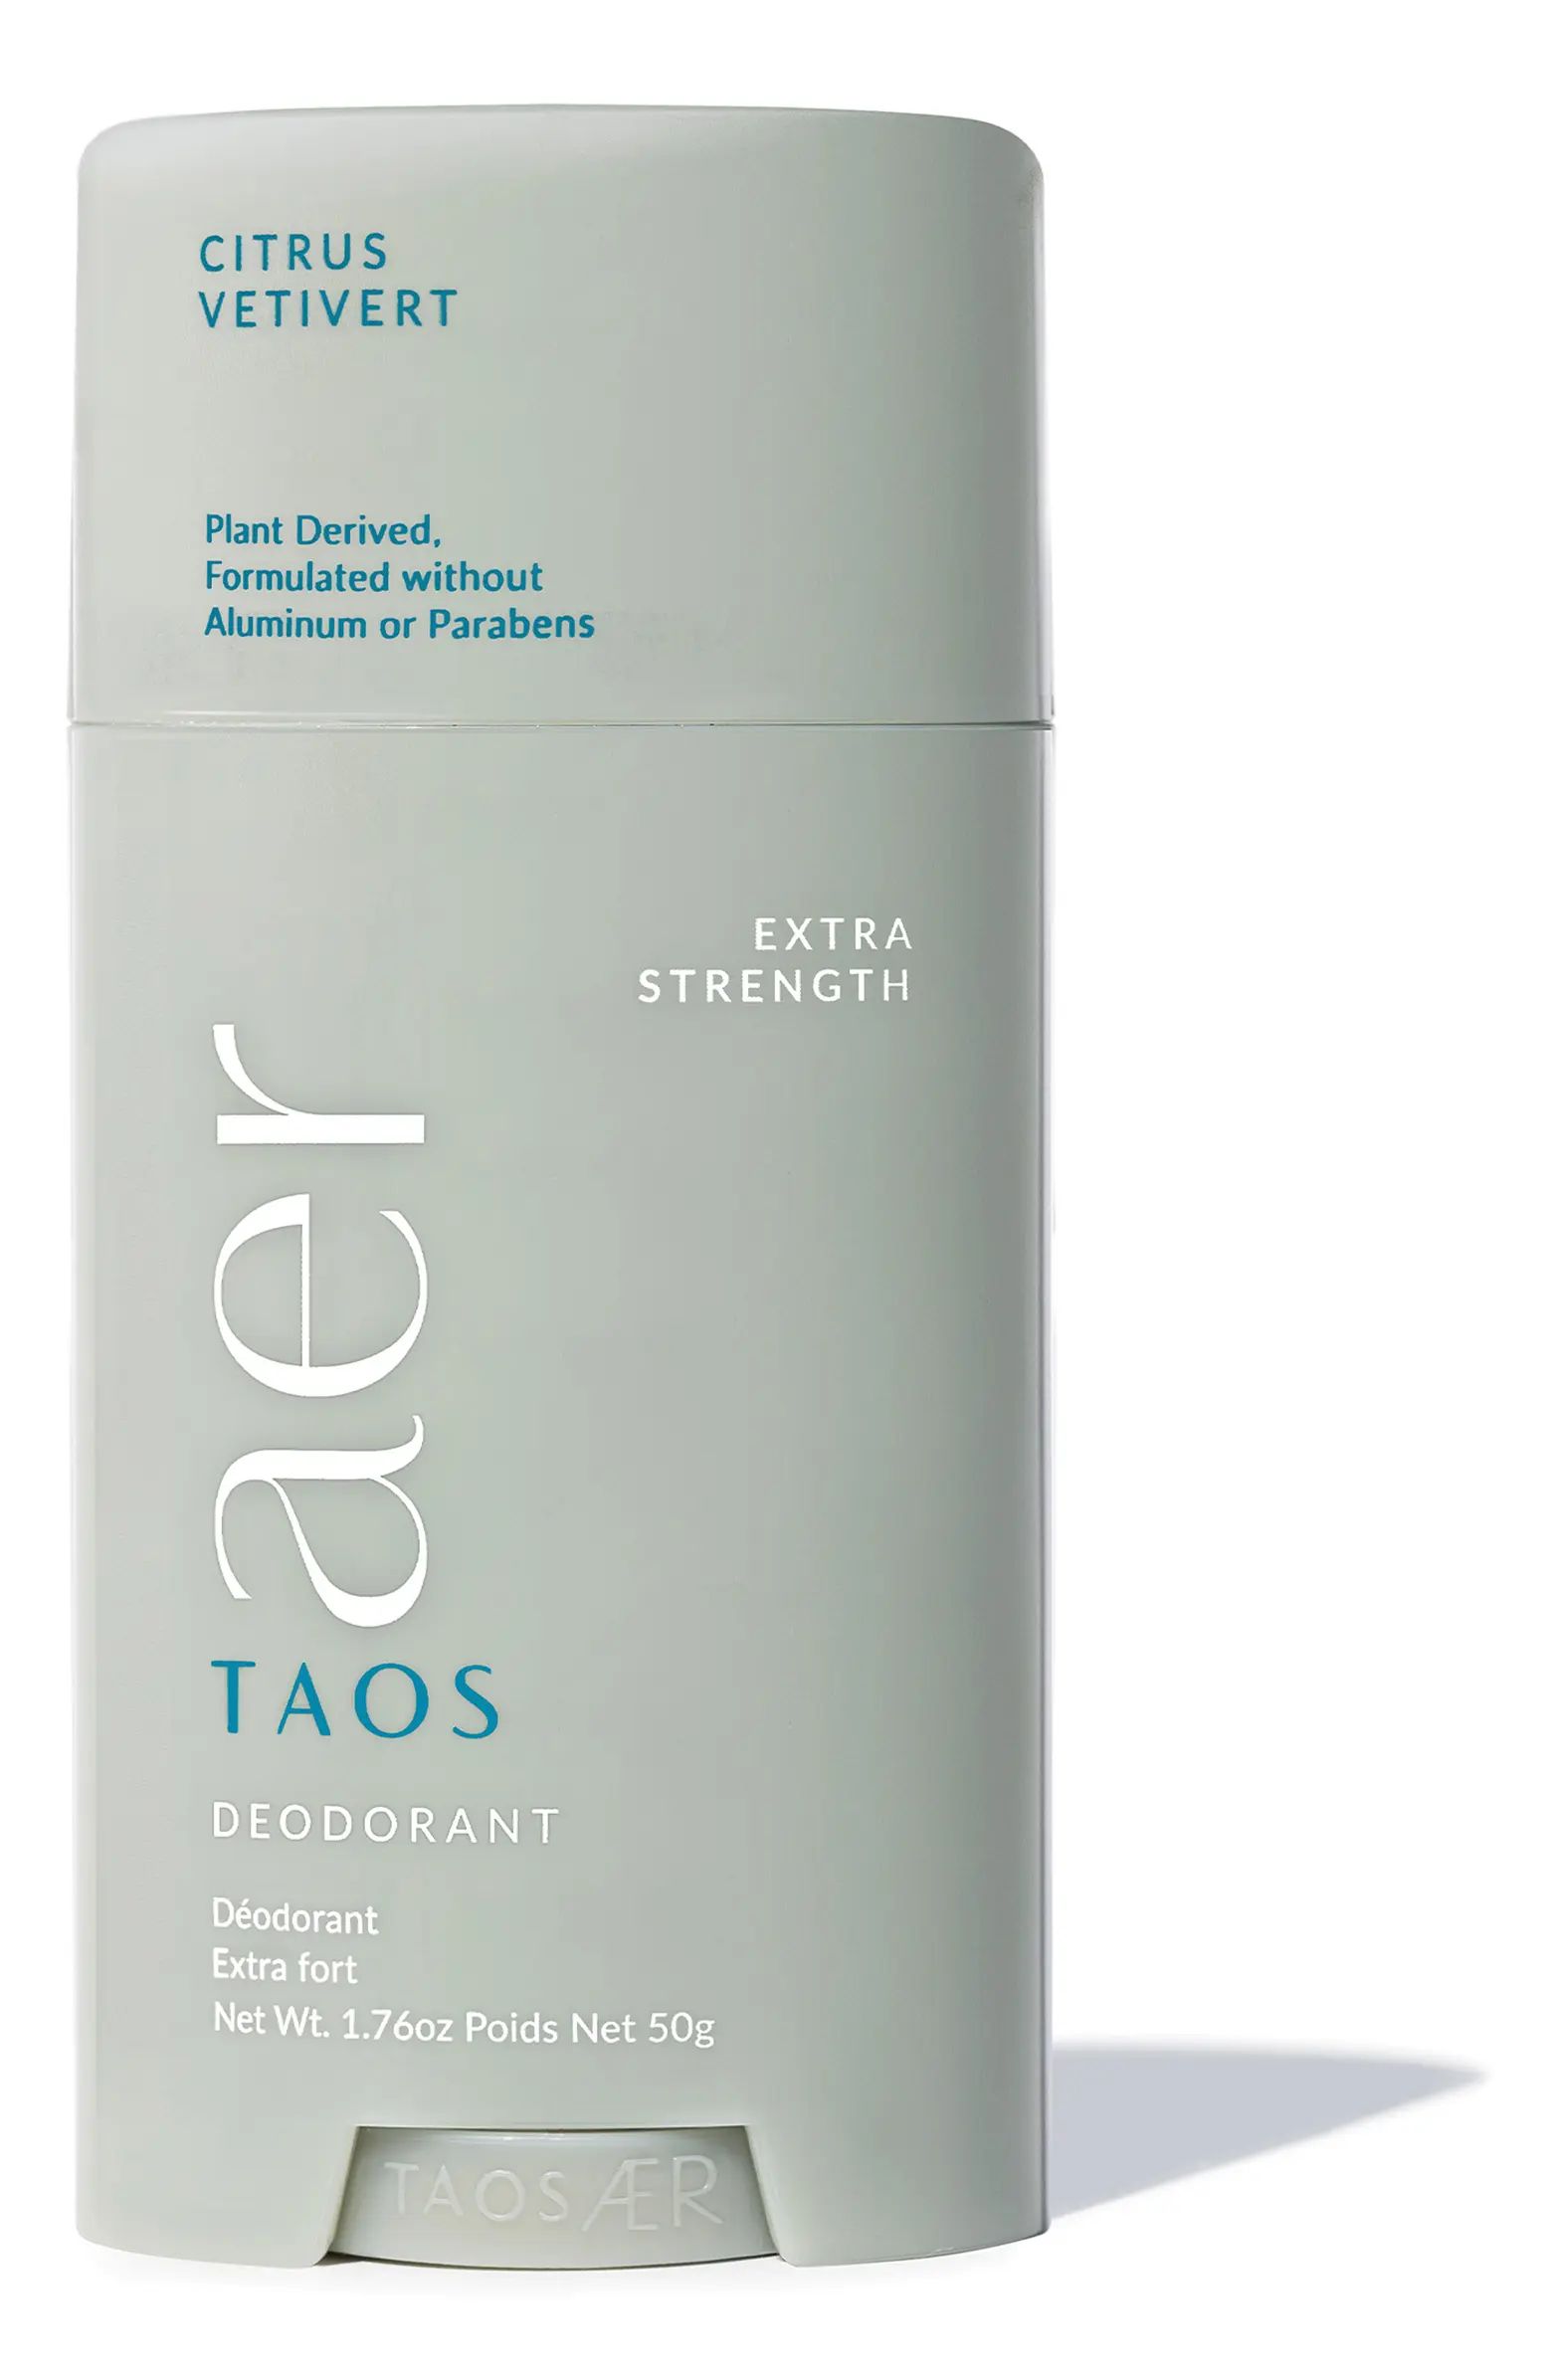 Taos AER Citrus Vetivert Extra Strength Deodorant | Nordstrom | Nordstrom